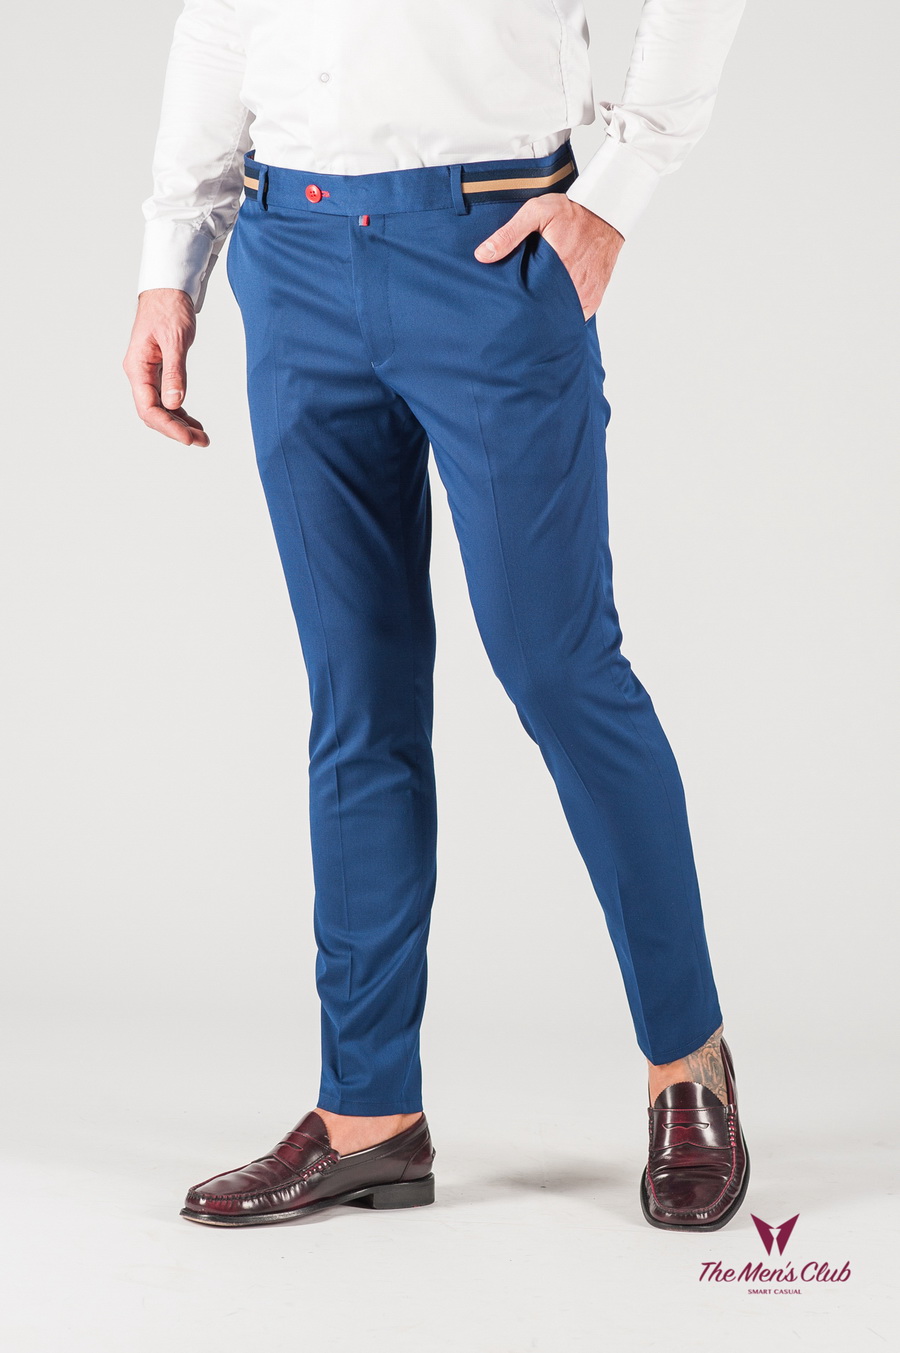 Синие мужские брюки со стрелками. Арт.:6-833-3